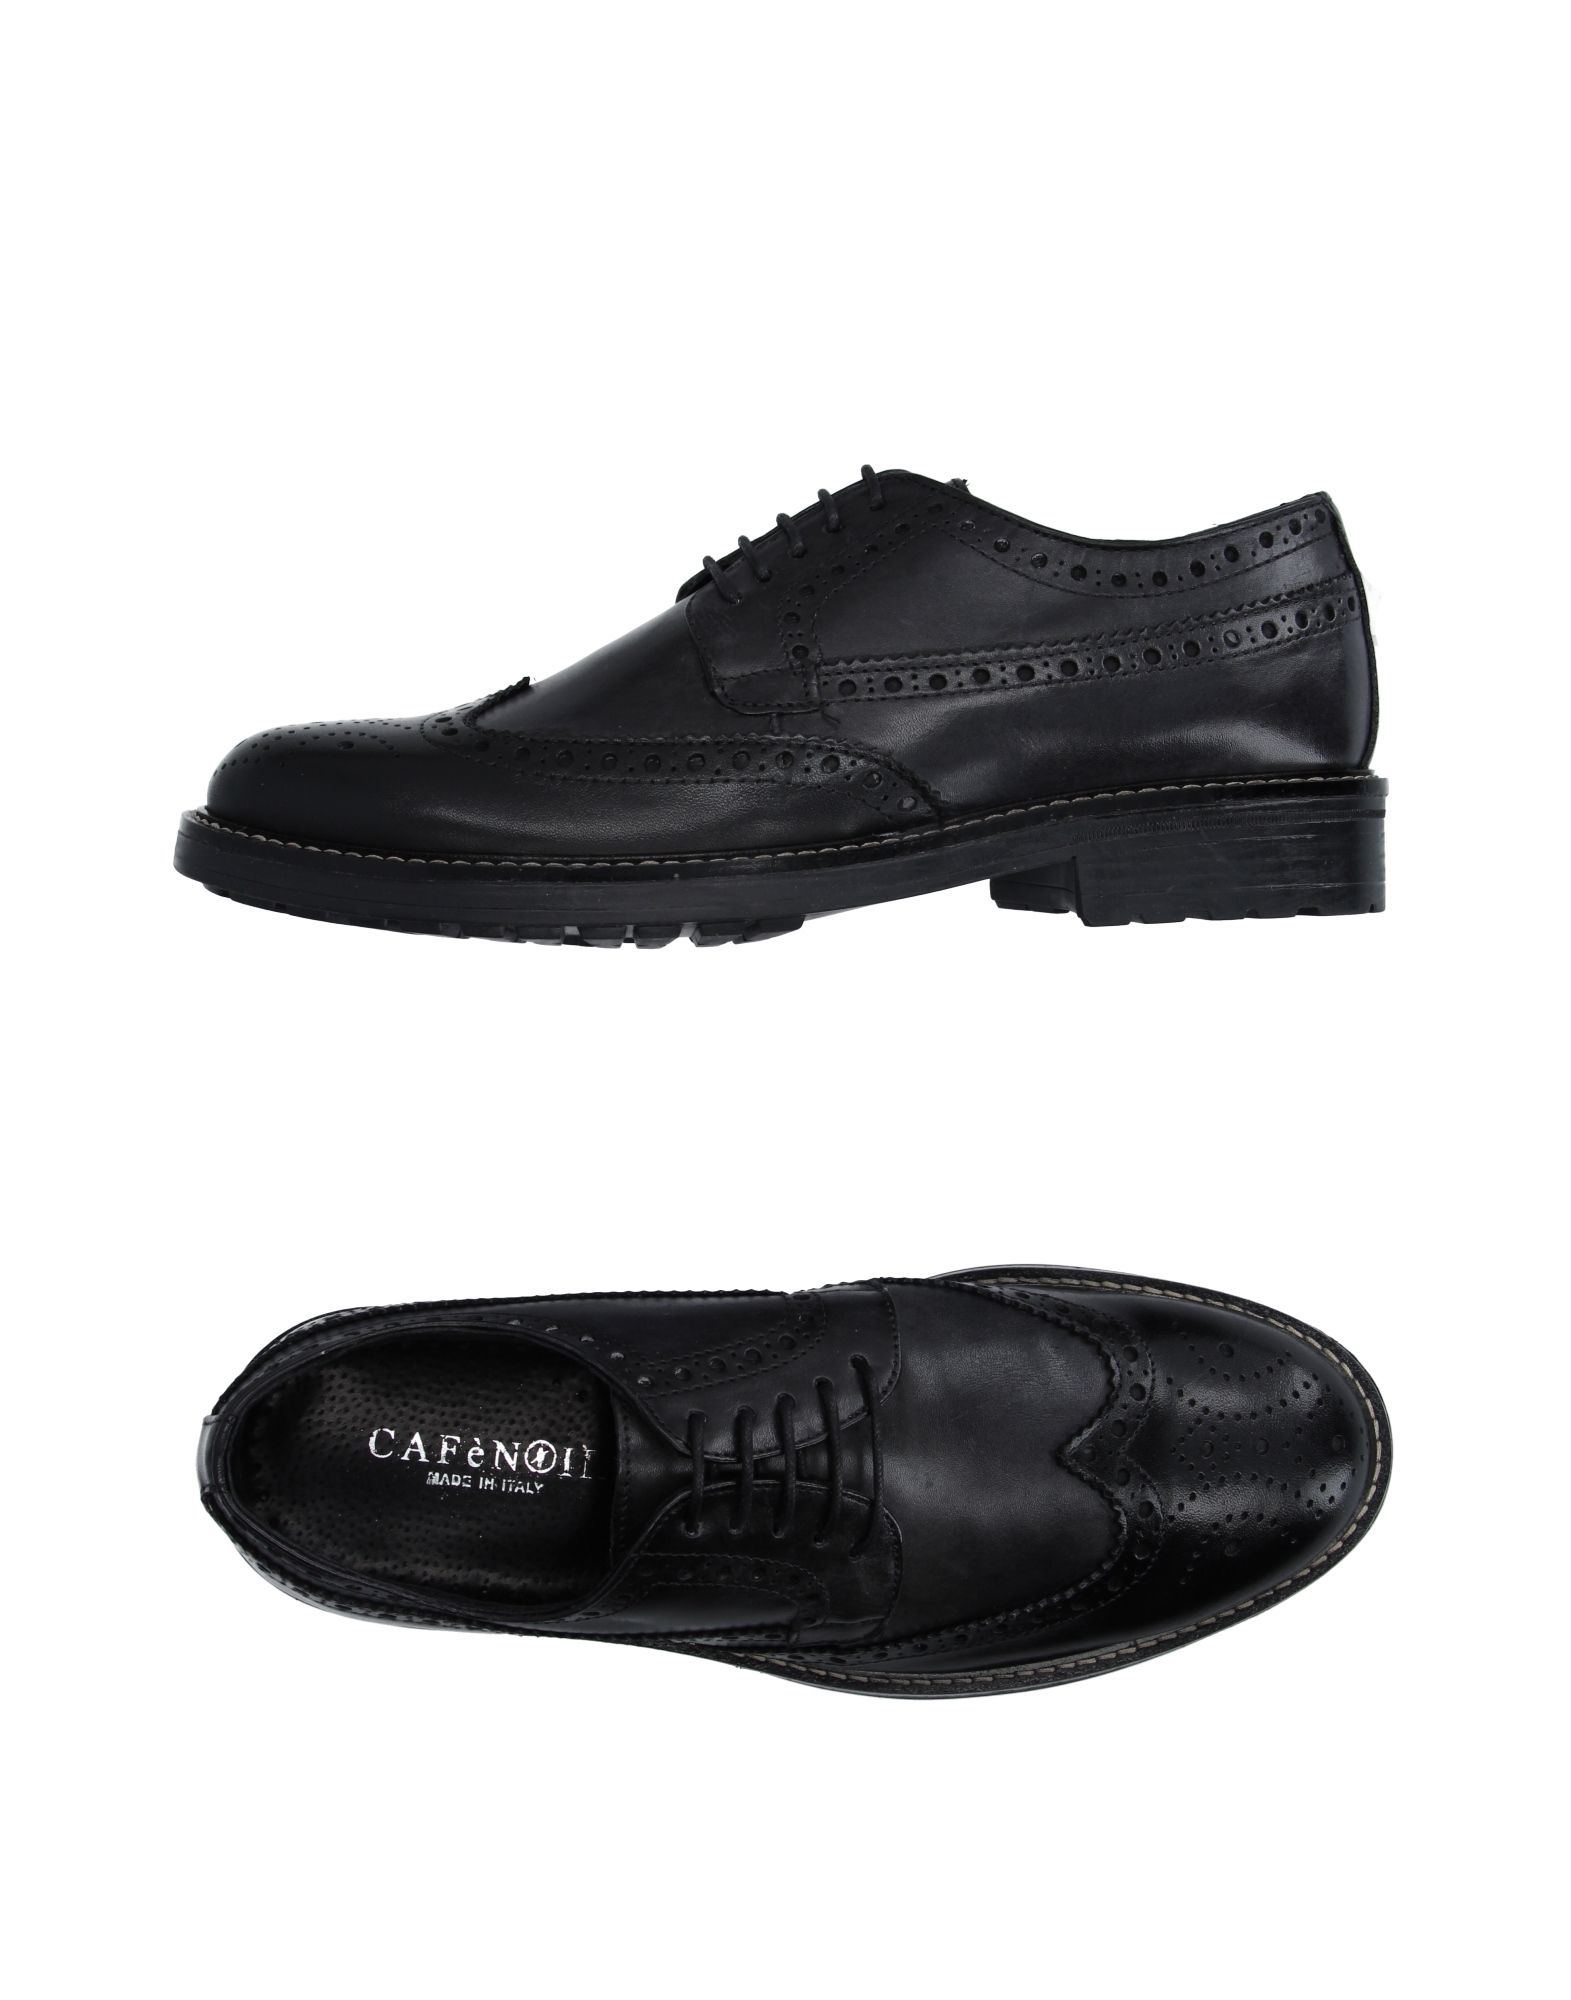 Lyst - Cafenoir Lace-up Shoe in Black for Men